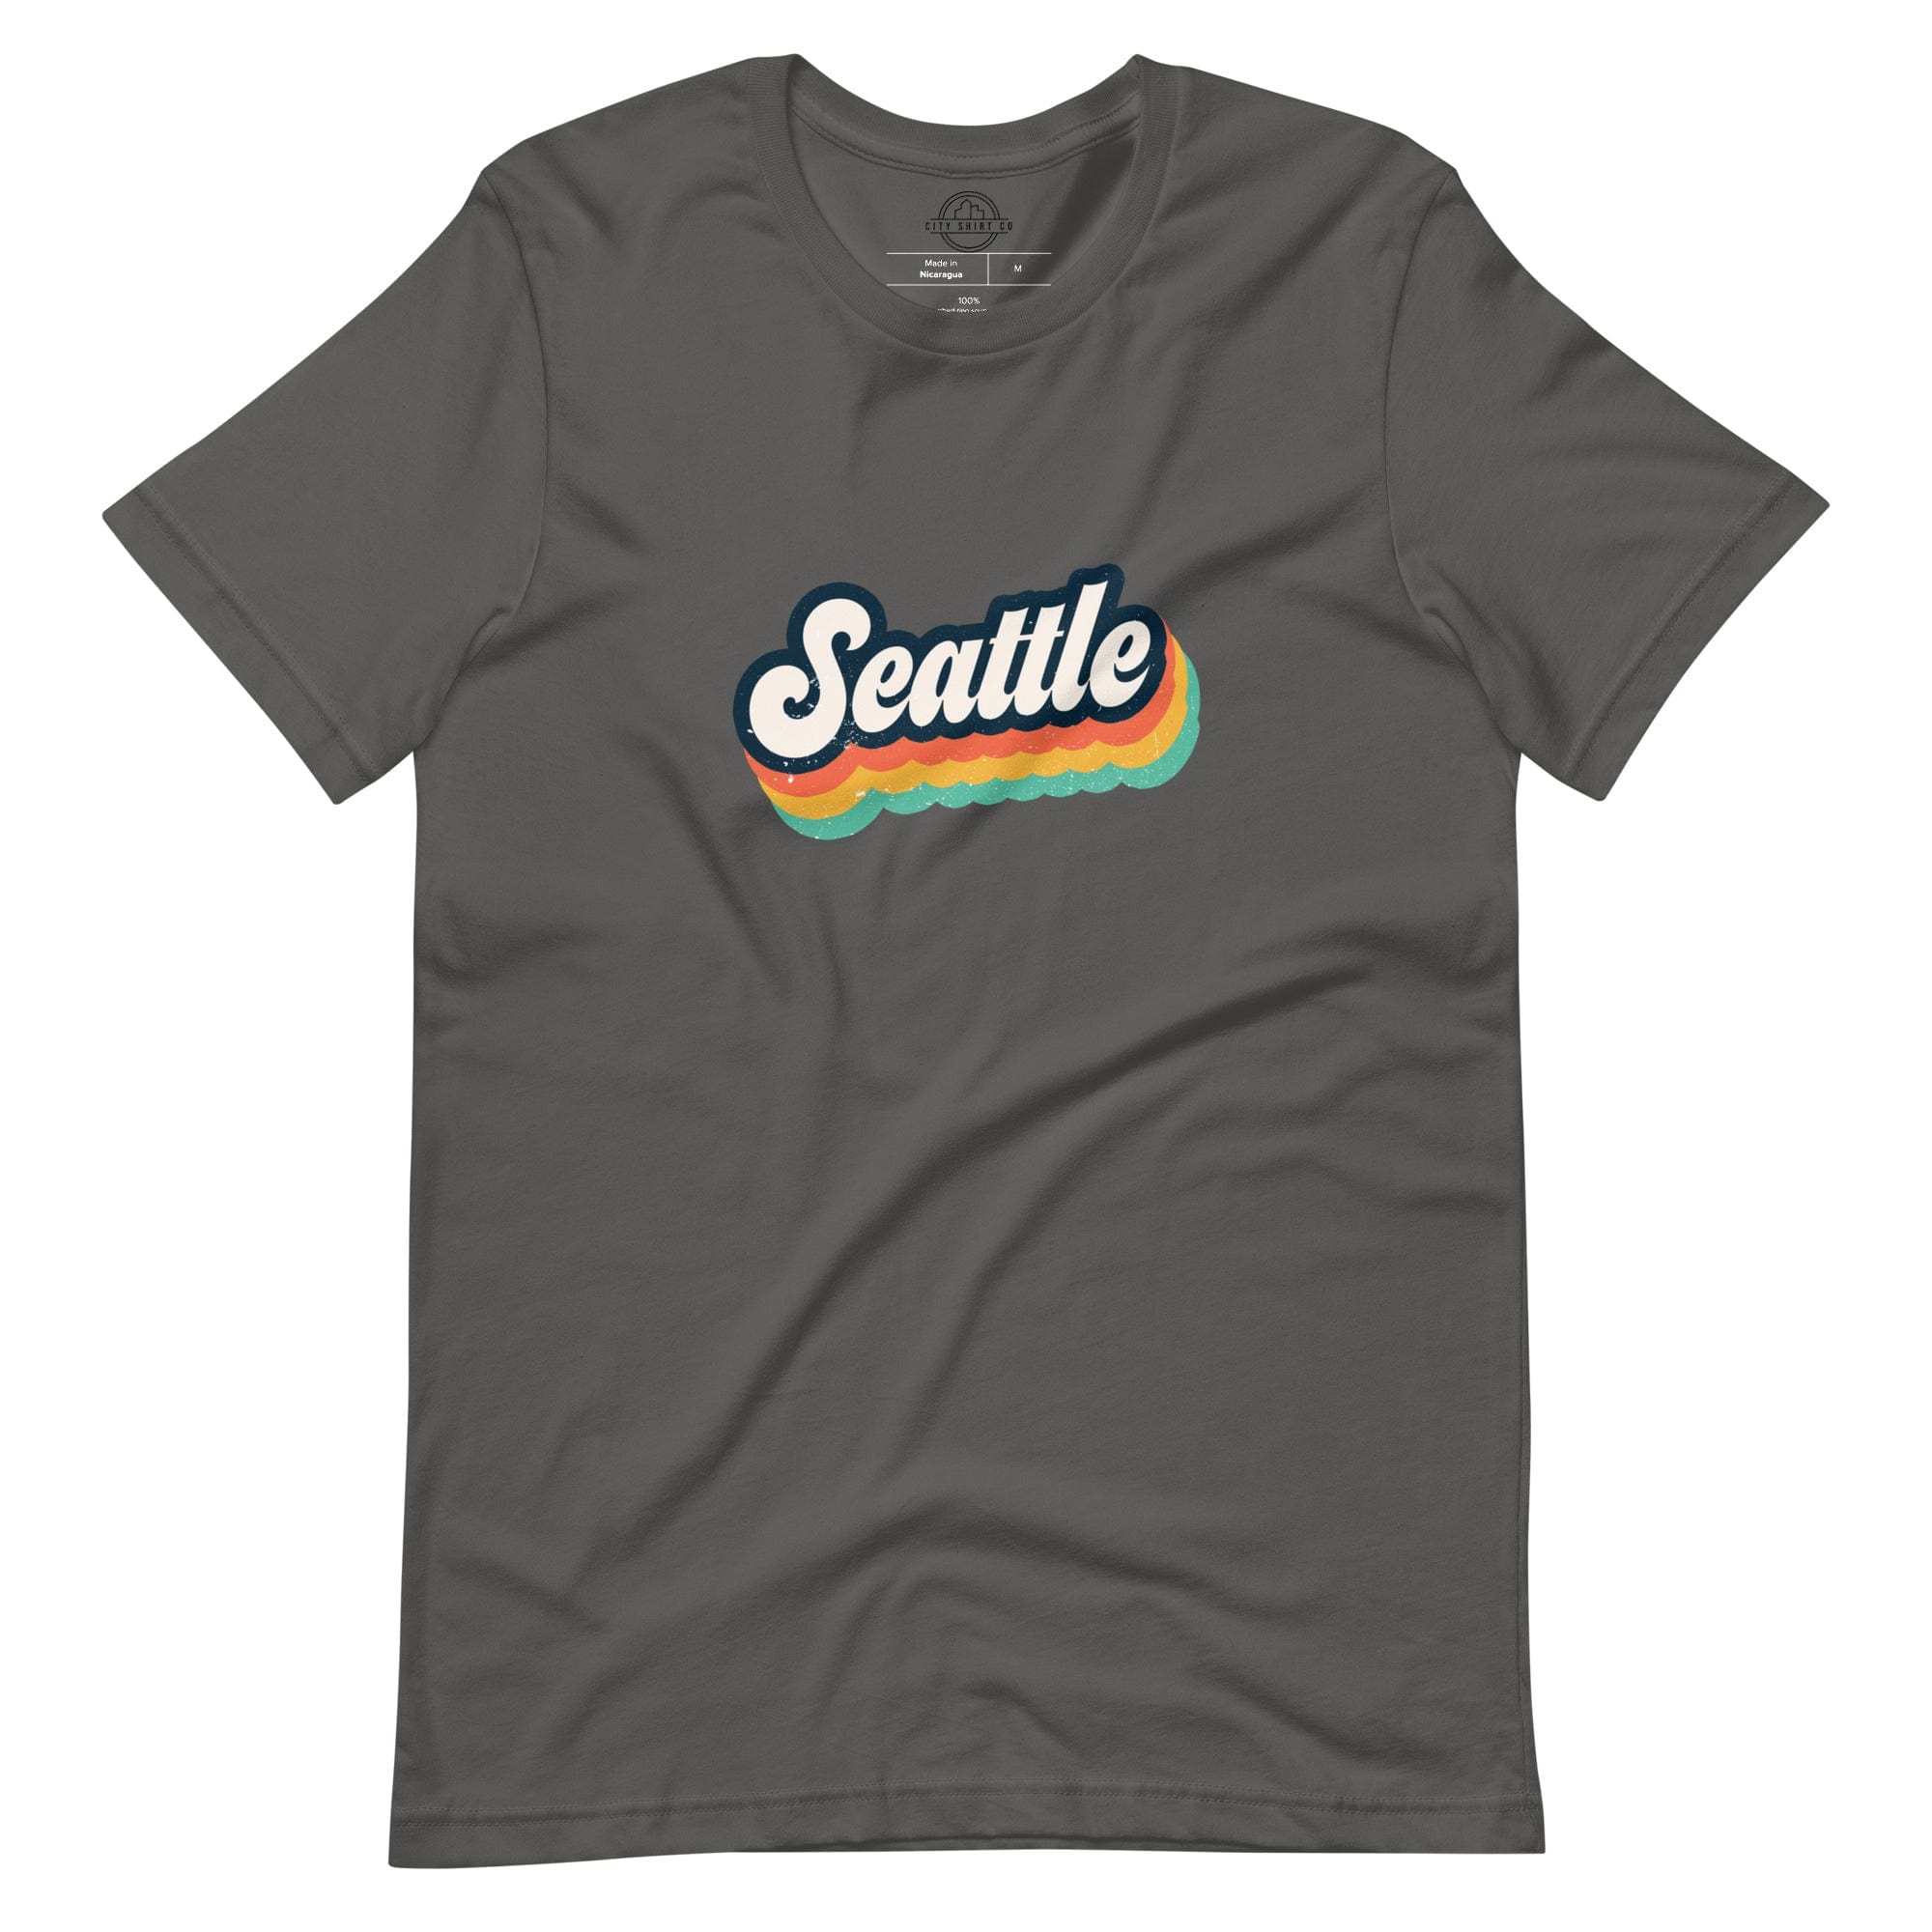 City Shirt Co Seattle Retro T-Shirt Asphalt / S